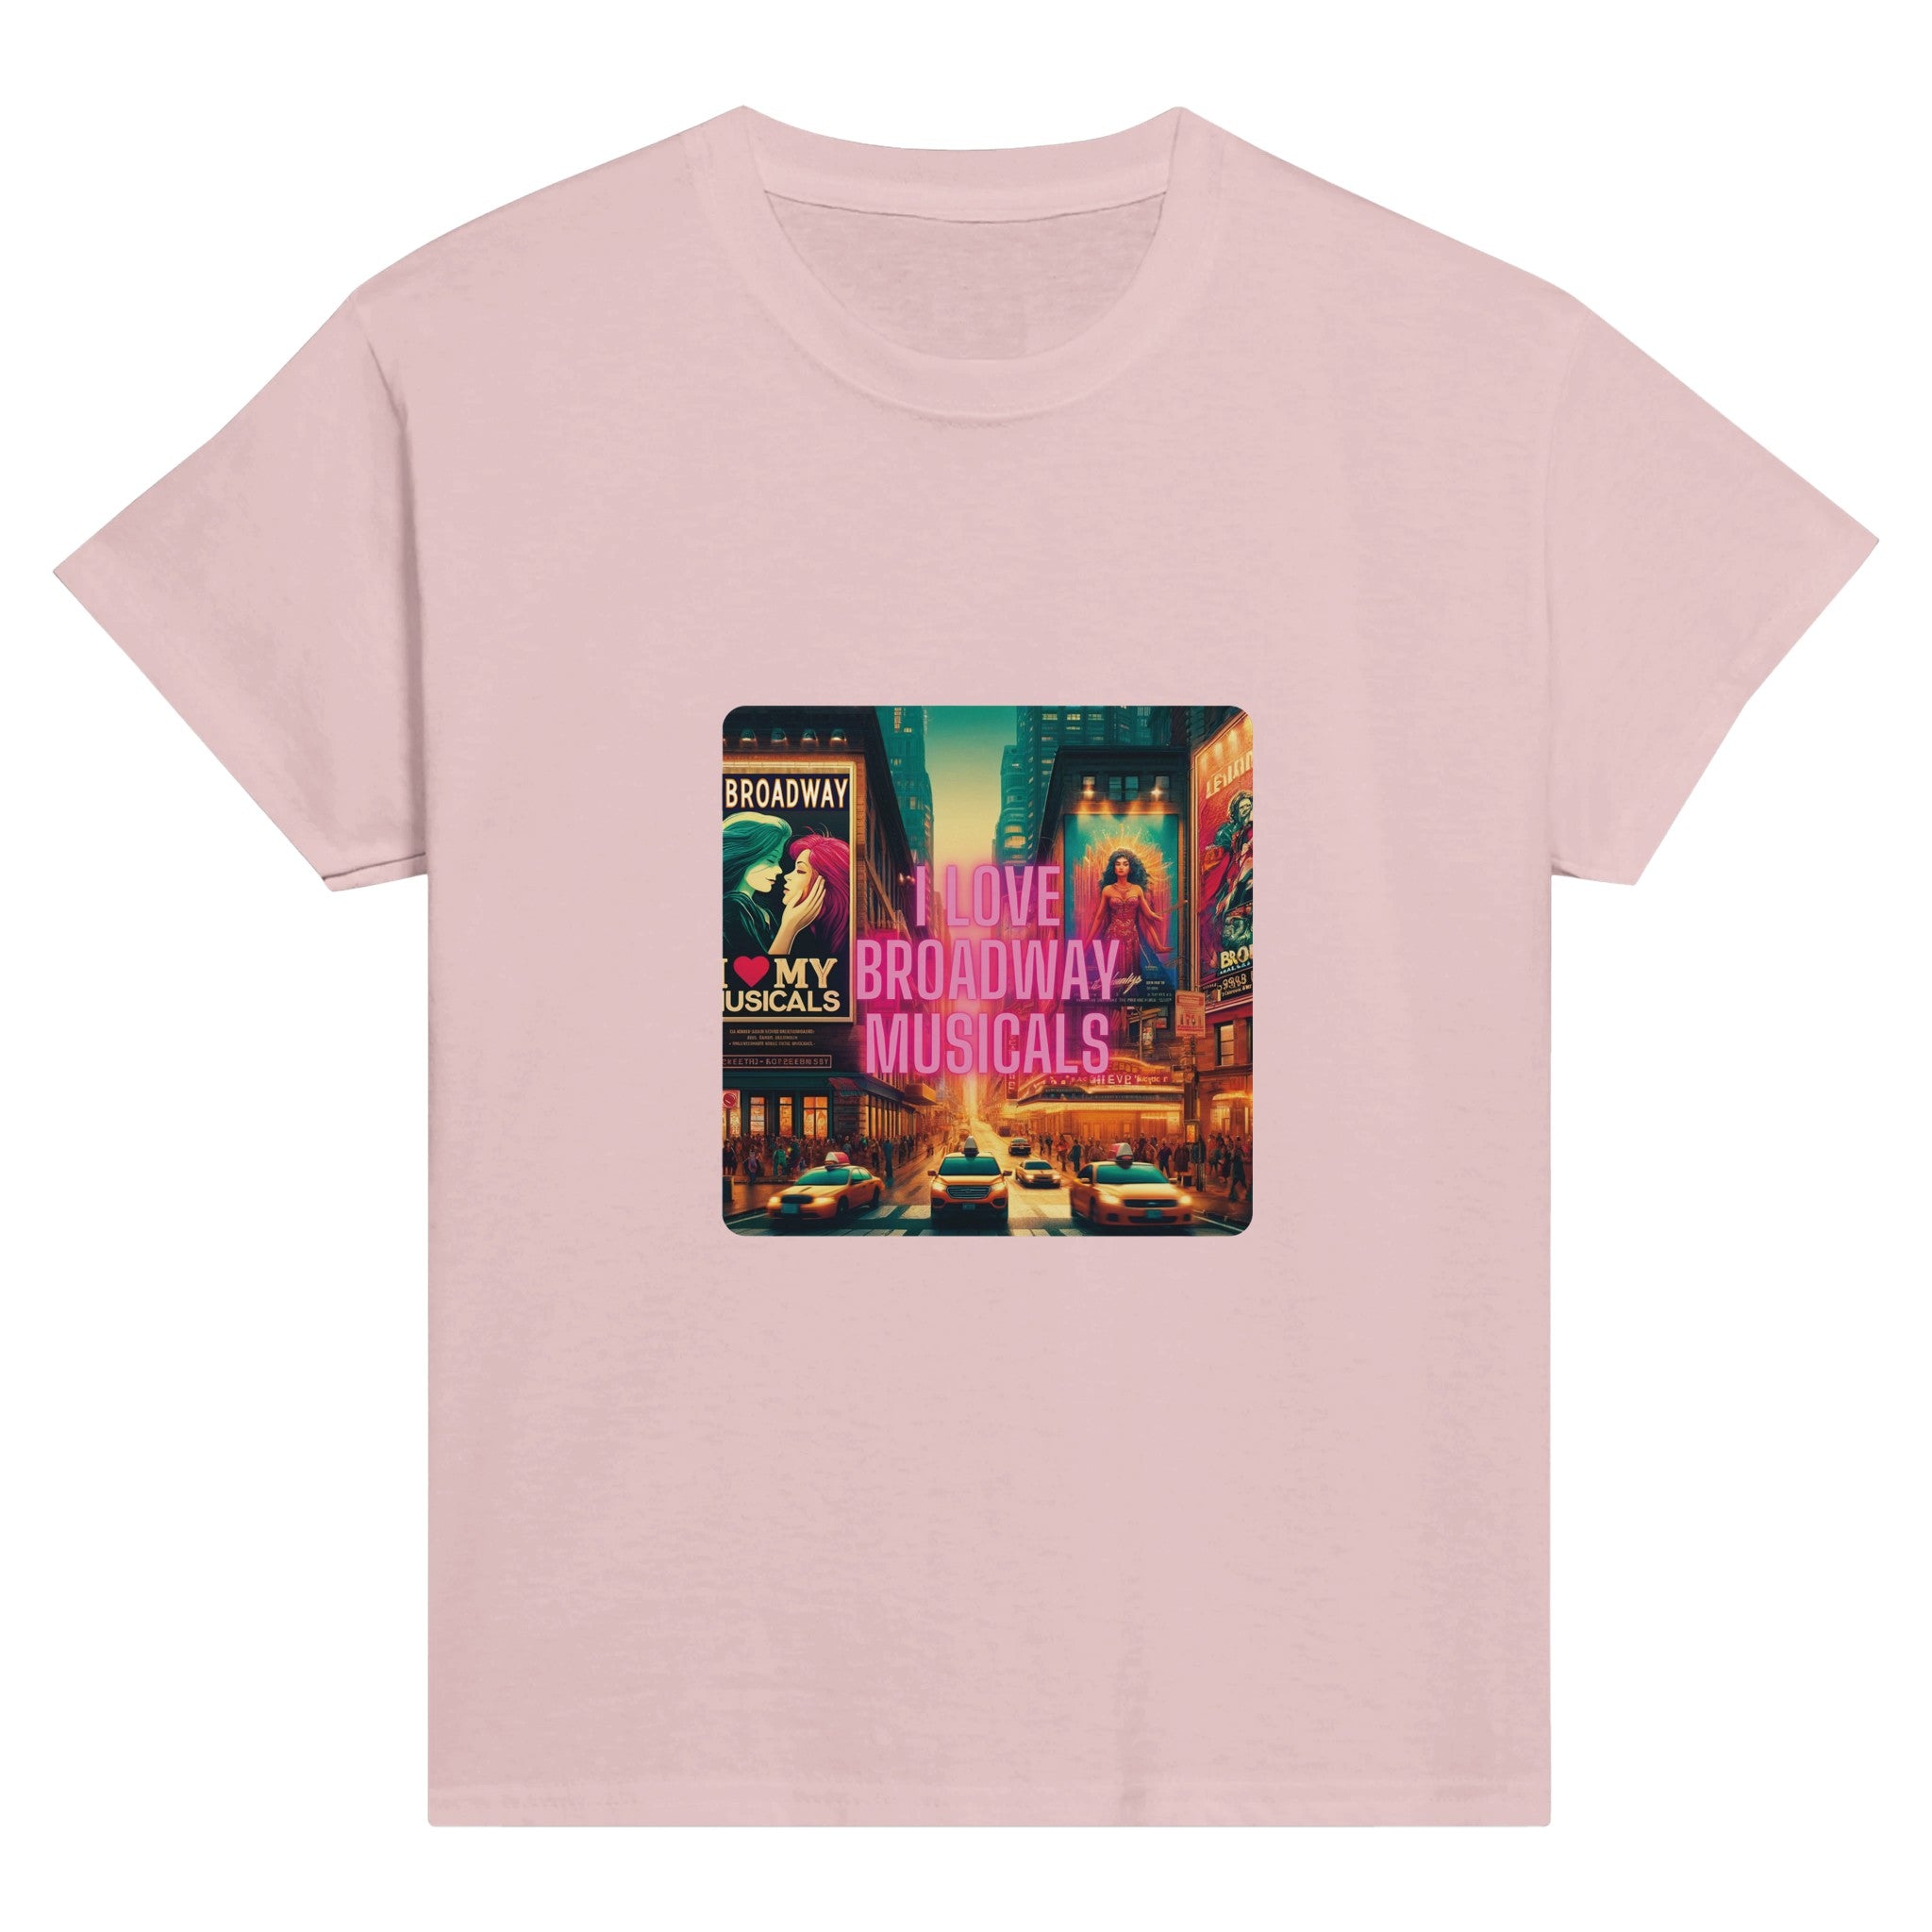 Classic Kids Crewneck "I Love Broadway Musical" T-shirt